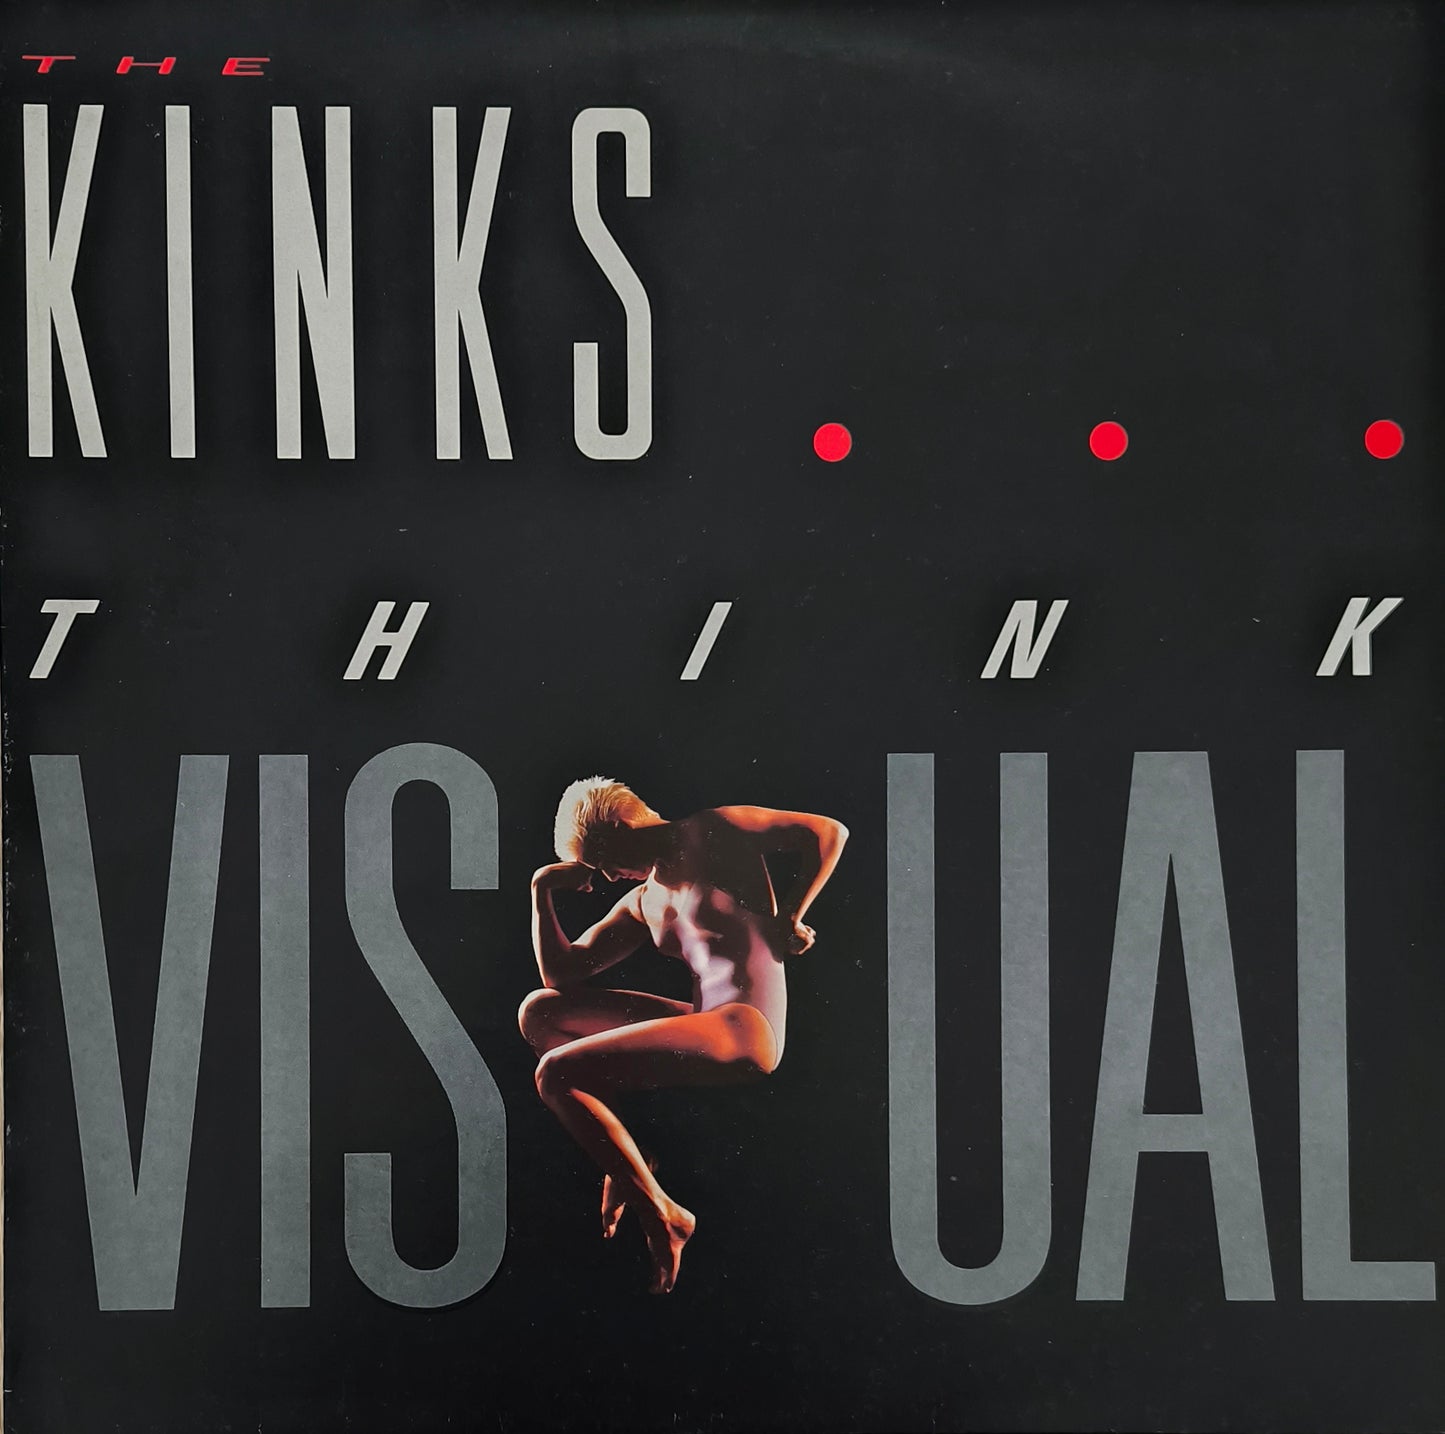 THE KINKS - Think Visual